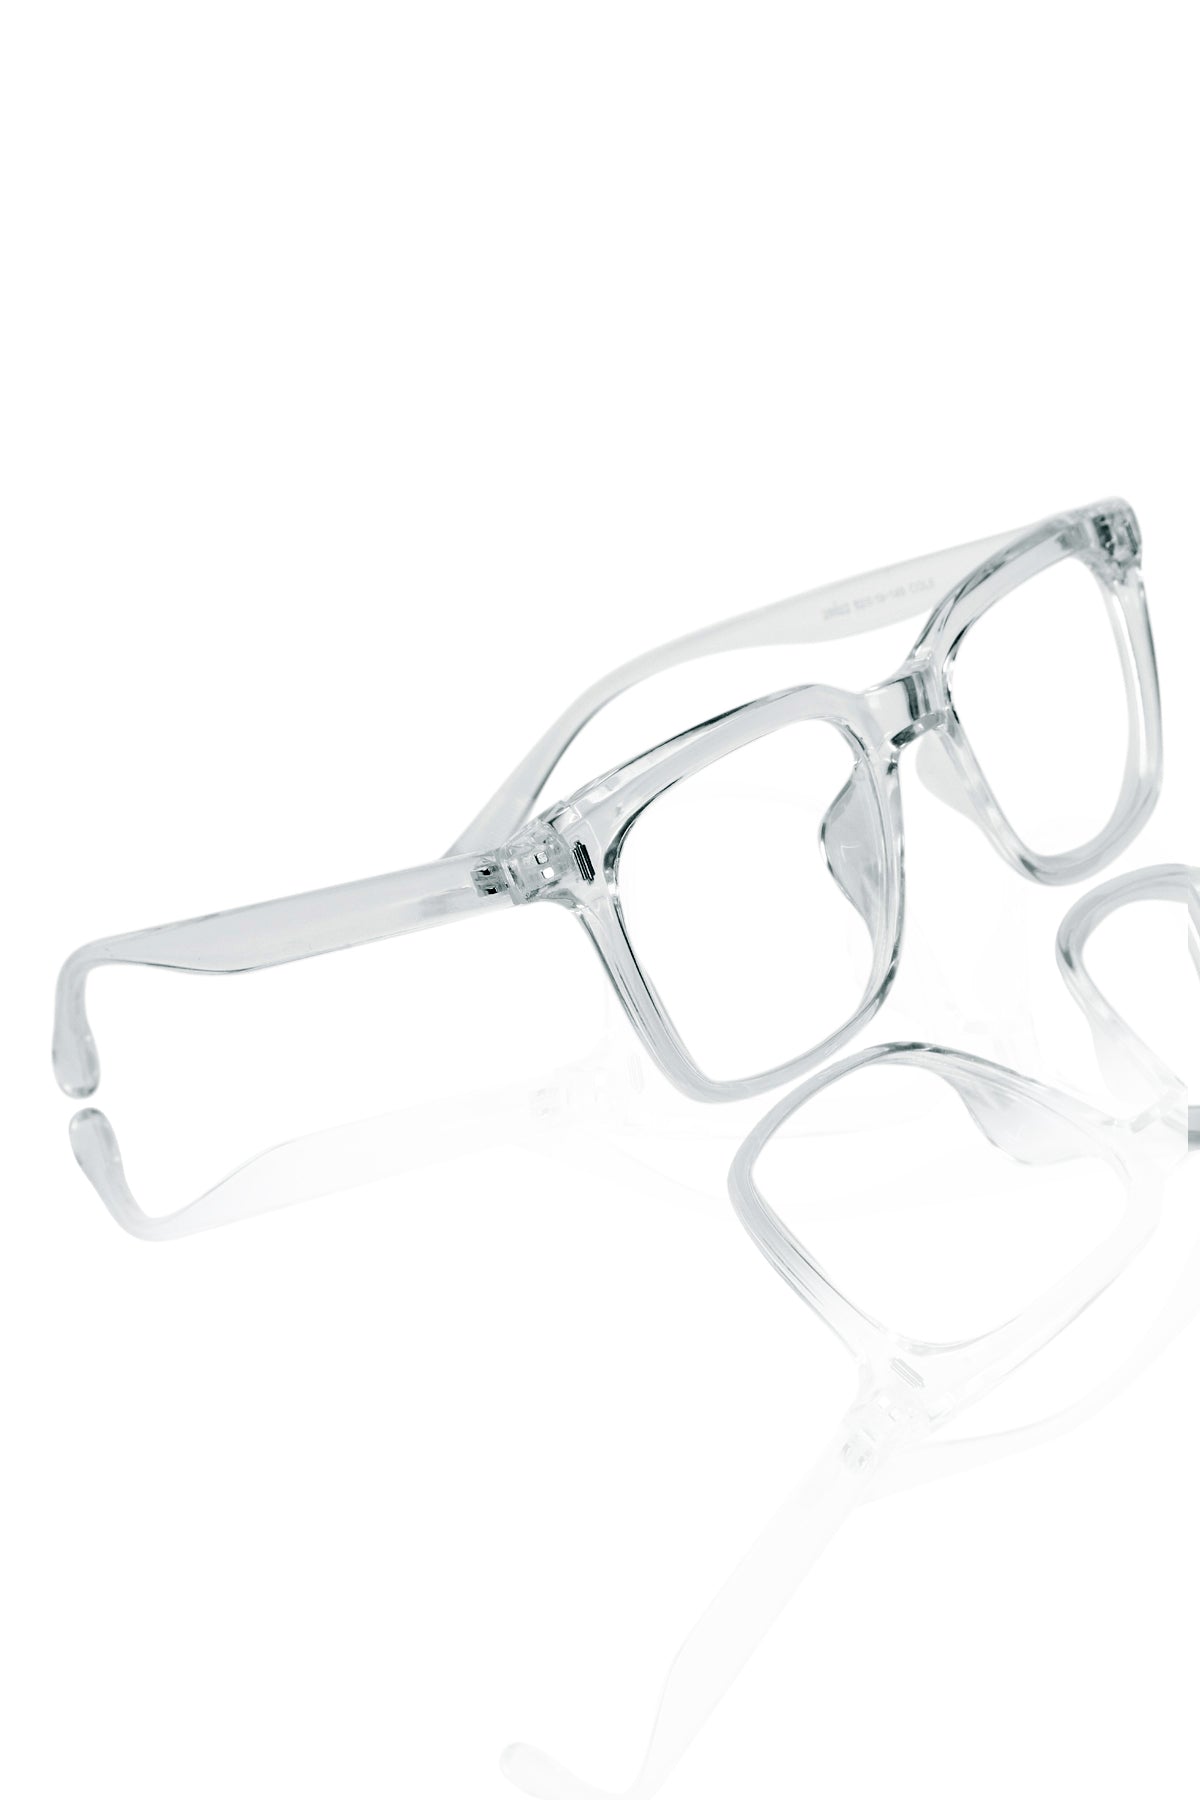 Jodykoes® Premium Series Square Transparent Eyeglasses Frame | Anti Glare Eyewear Spectacles For Men and Women (Transparent) - Jodykoes ®